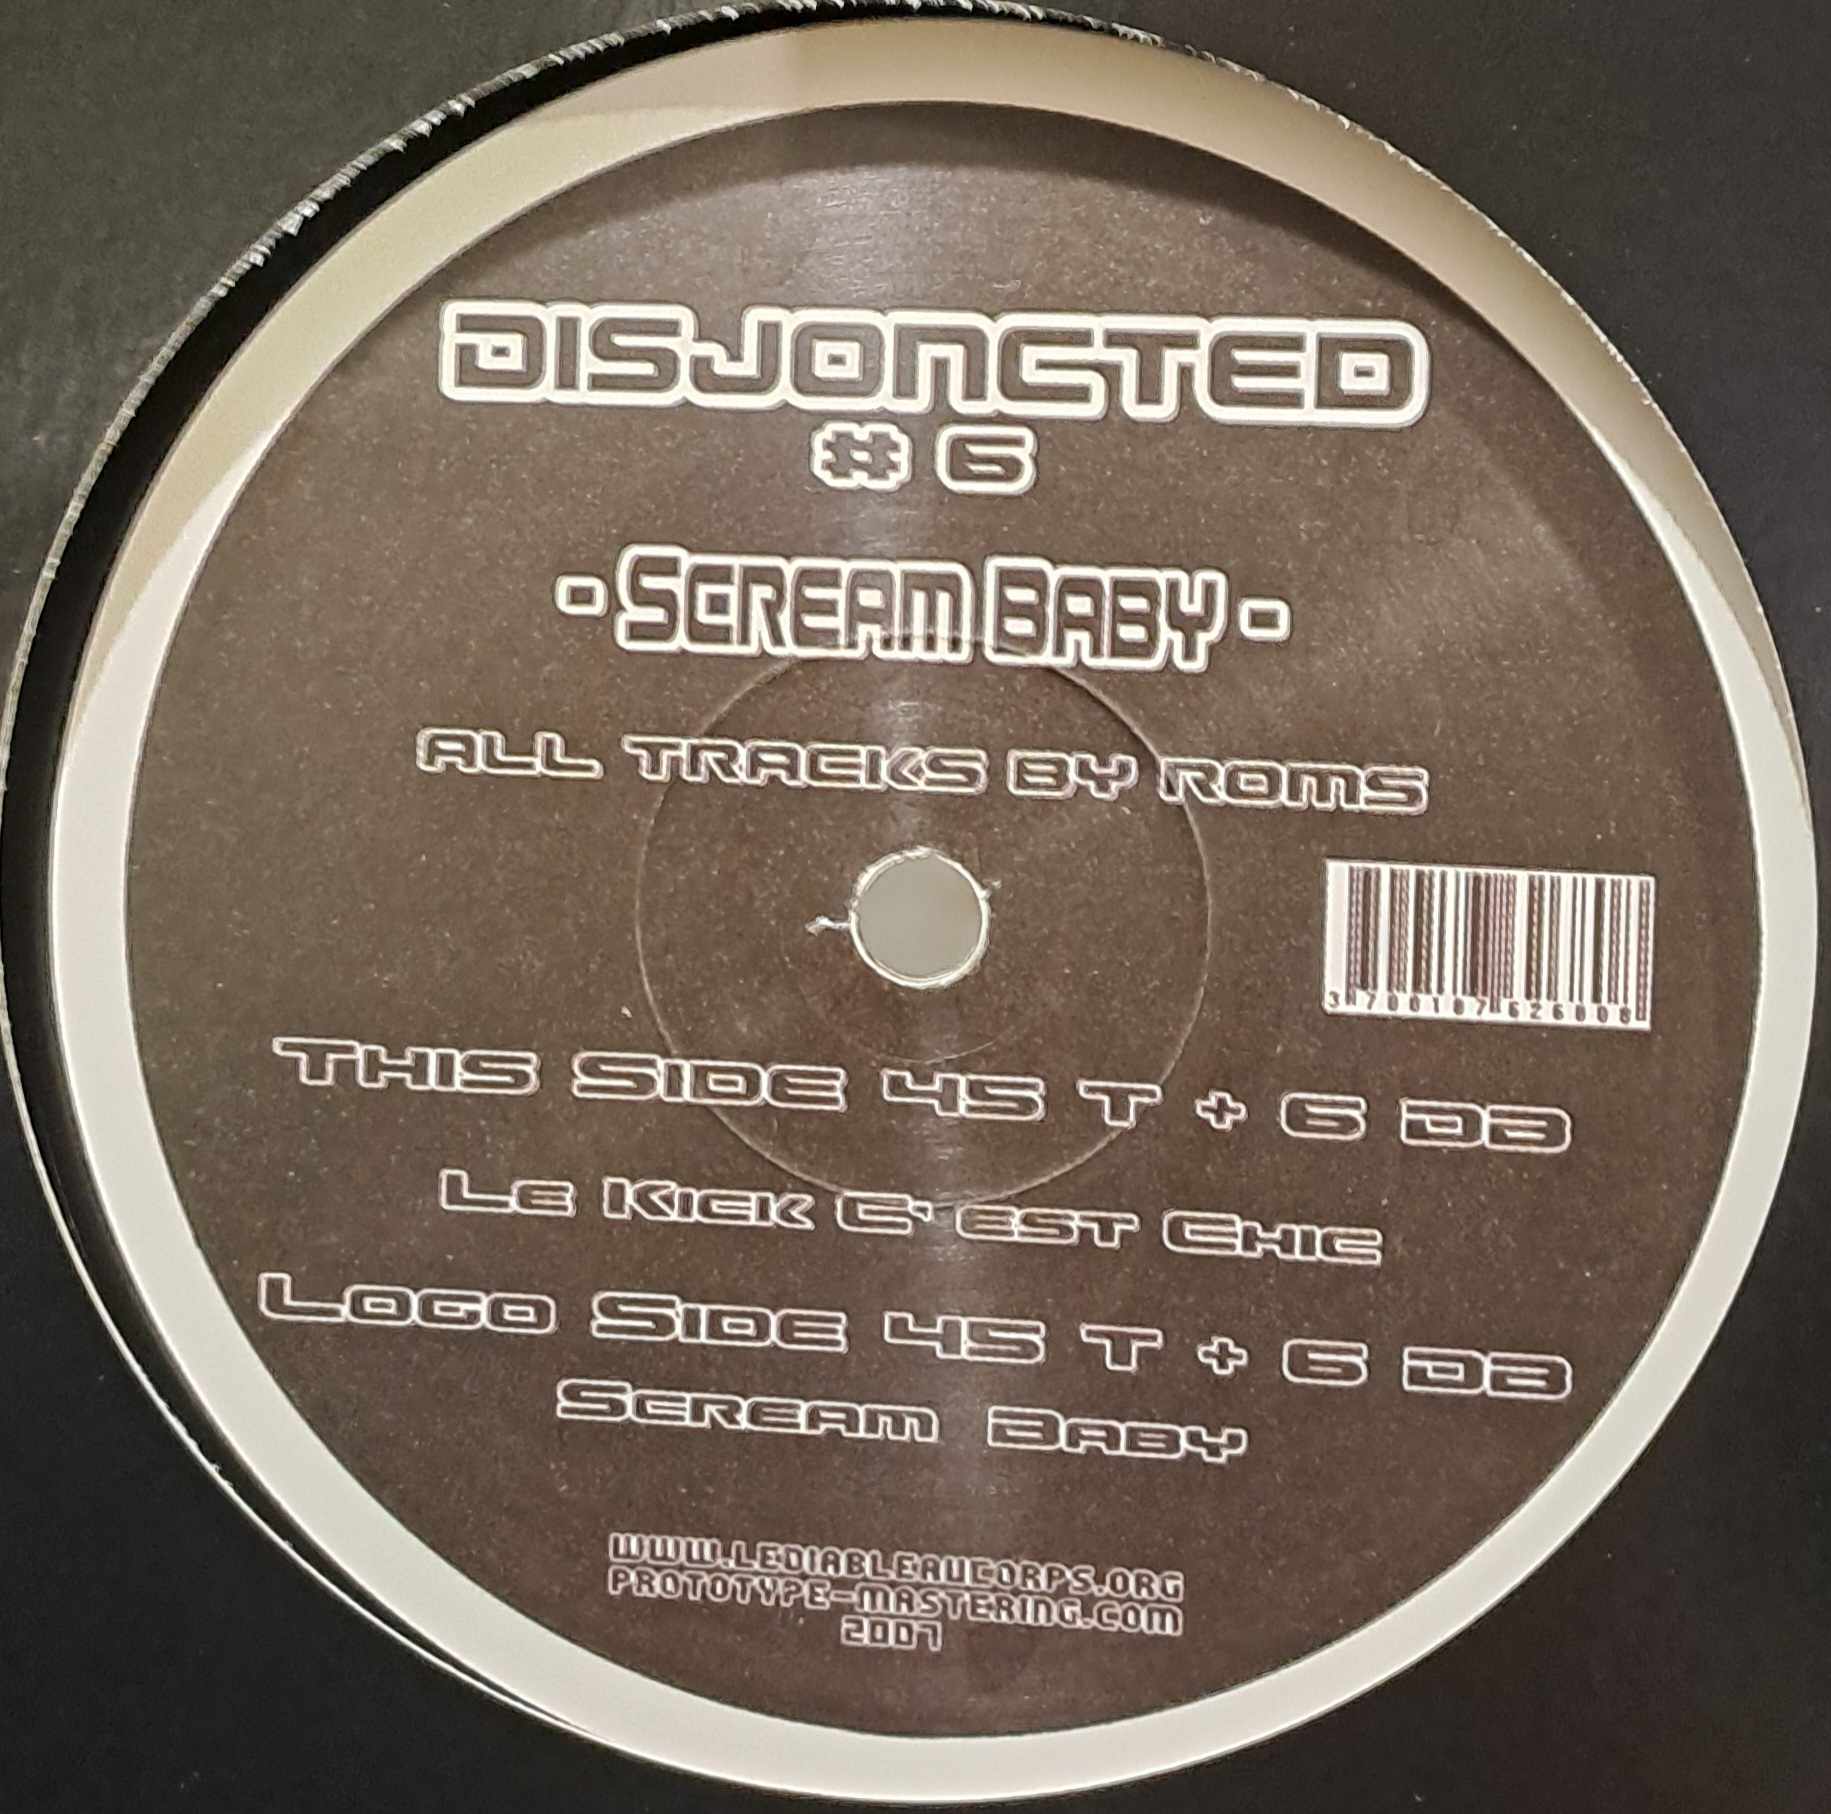 Disjoncted 06 - vinyle freetekno